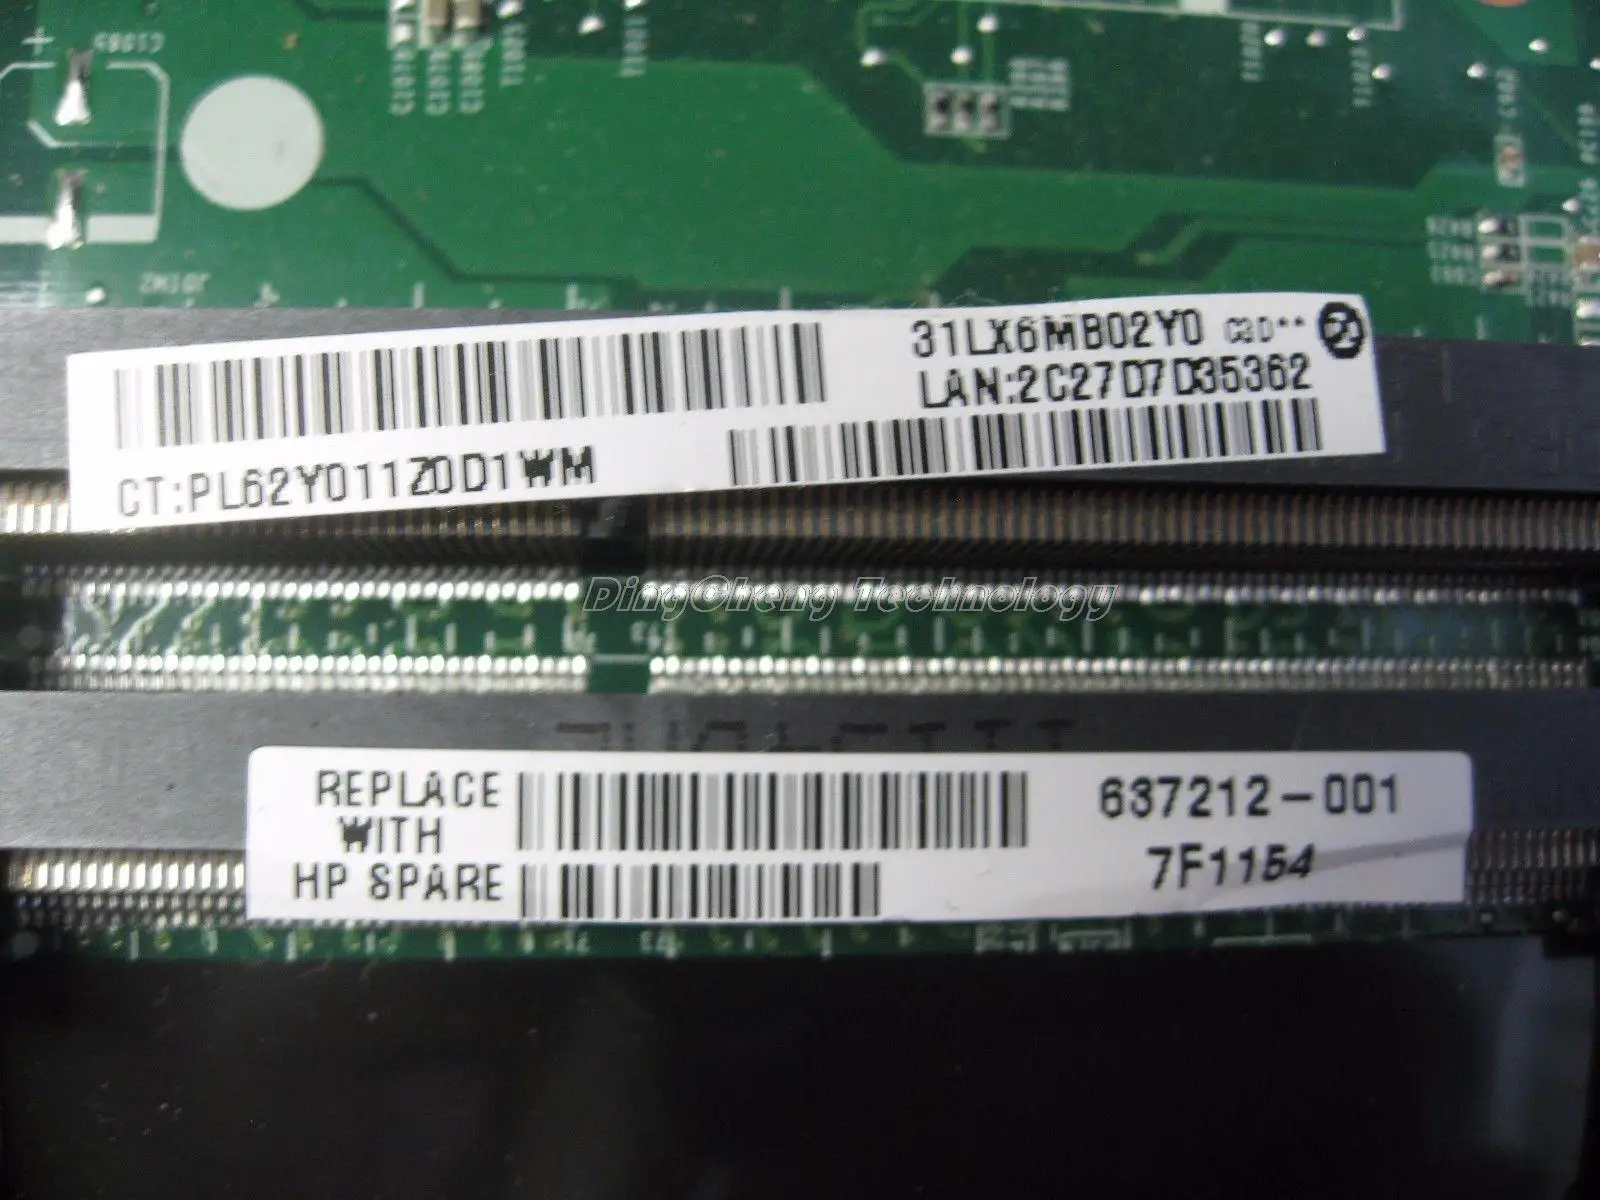 HOLYTIME материнская плата для ноутбука hp DV6 DV6-3000 637212-001 для процессора intel i3-370M со встроенной видеокартой